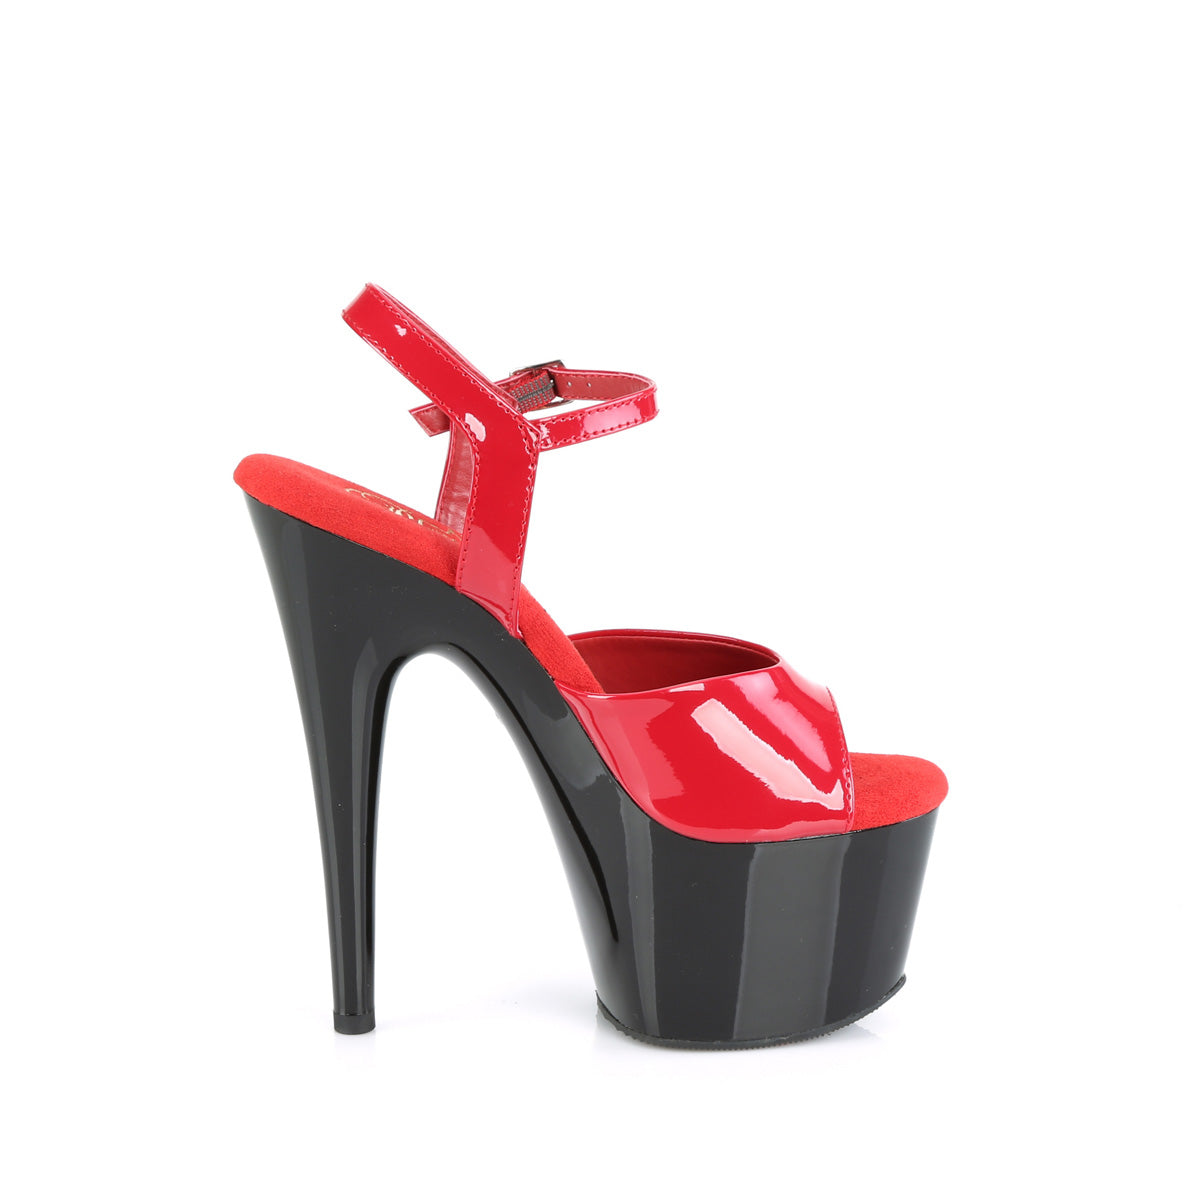 ADORE-709 Black & Red Ankle Peep Toe High Heel